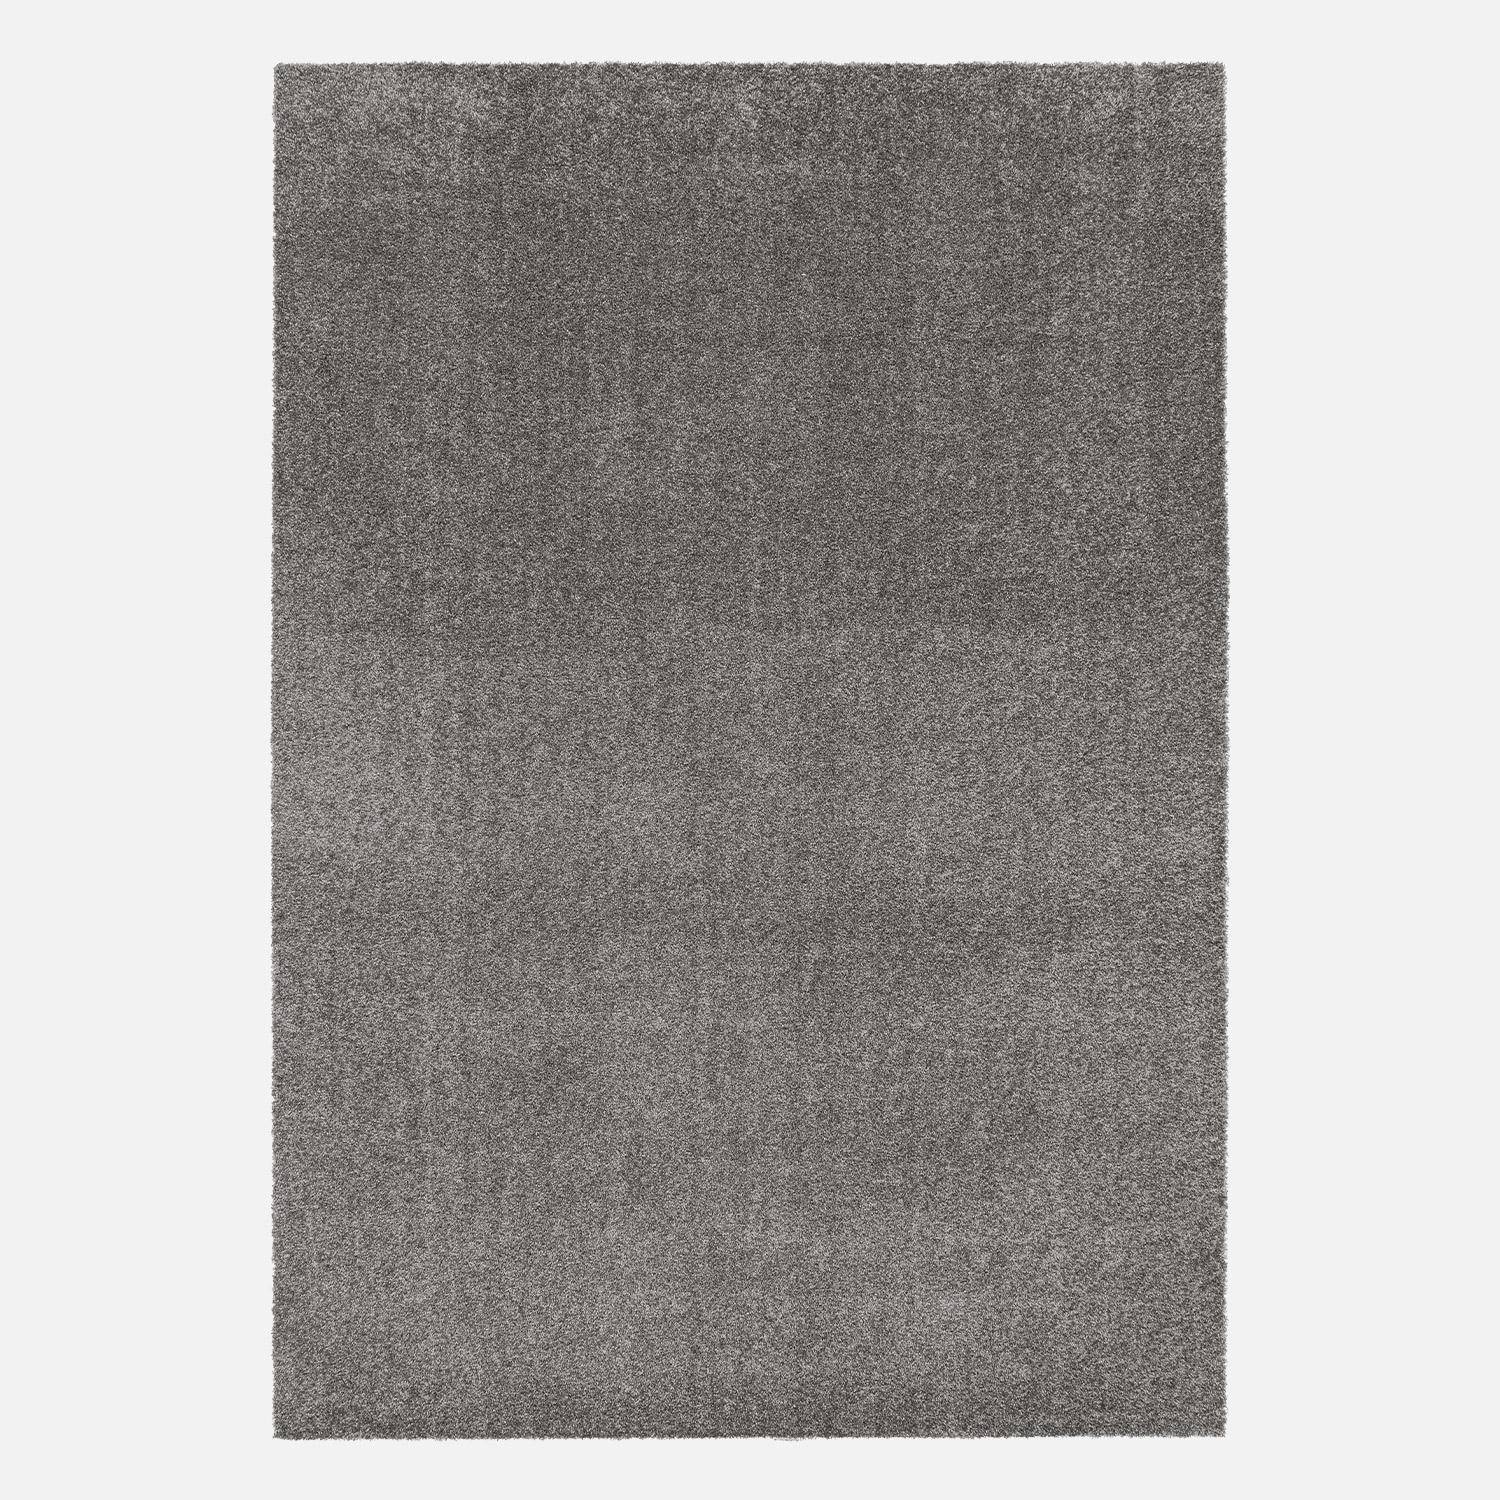 Anthracite grey curly velour interior carpet, Lawrence, 160 x 230 cm Photo3